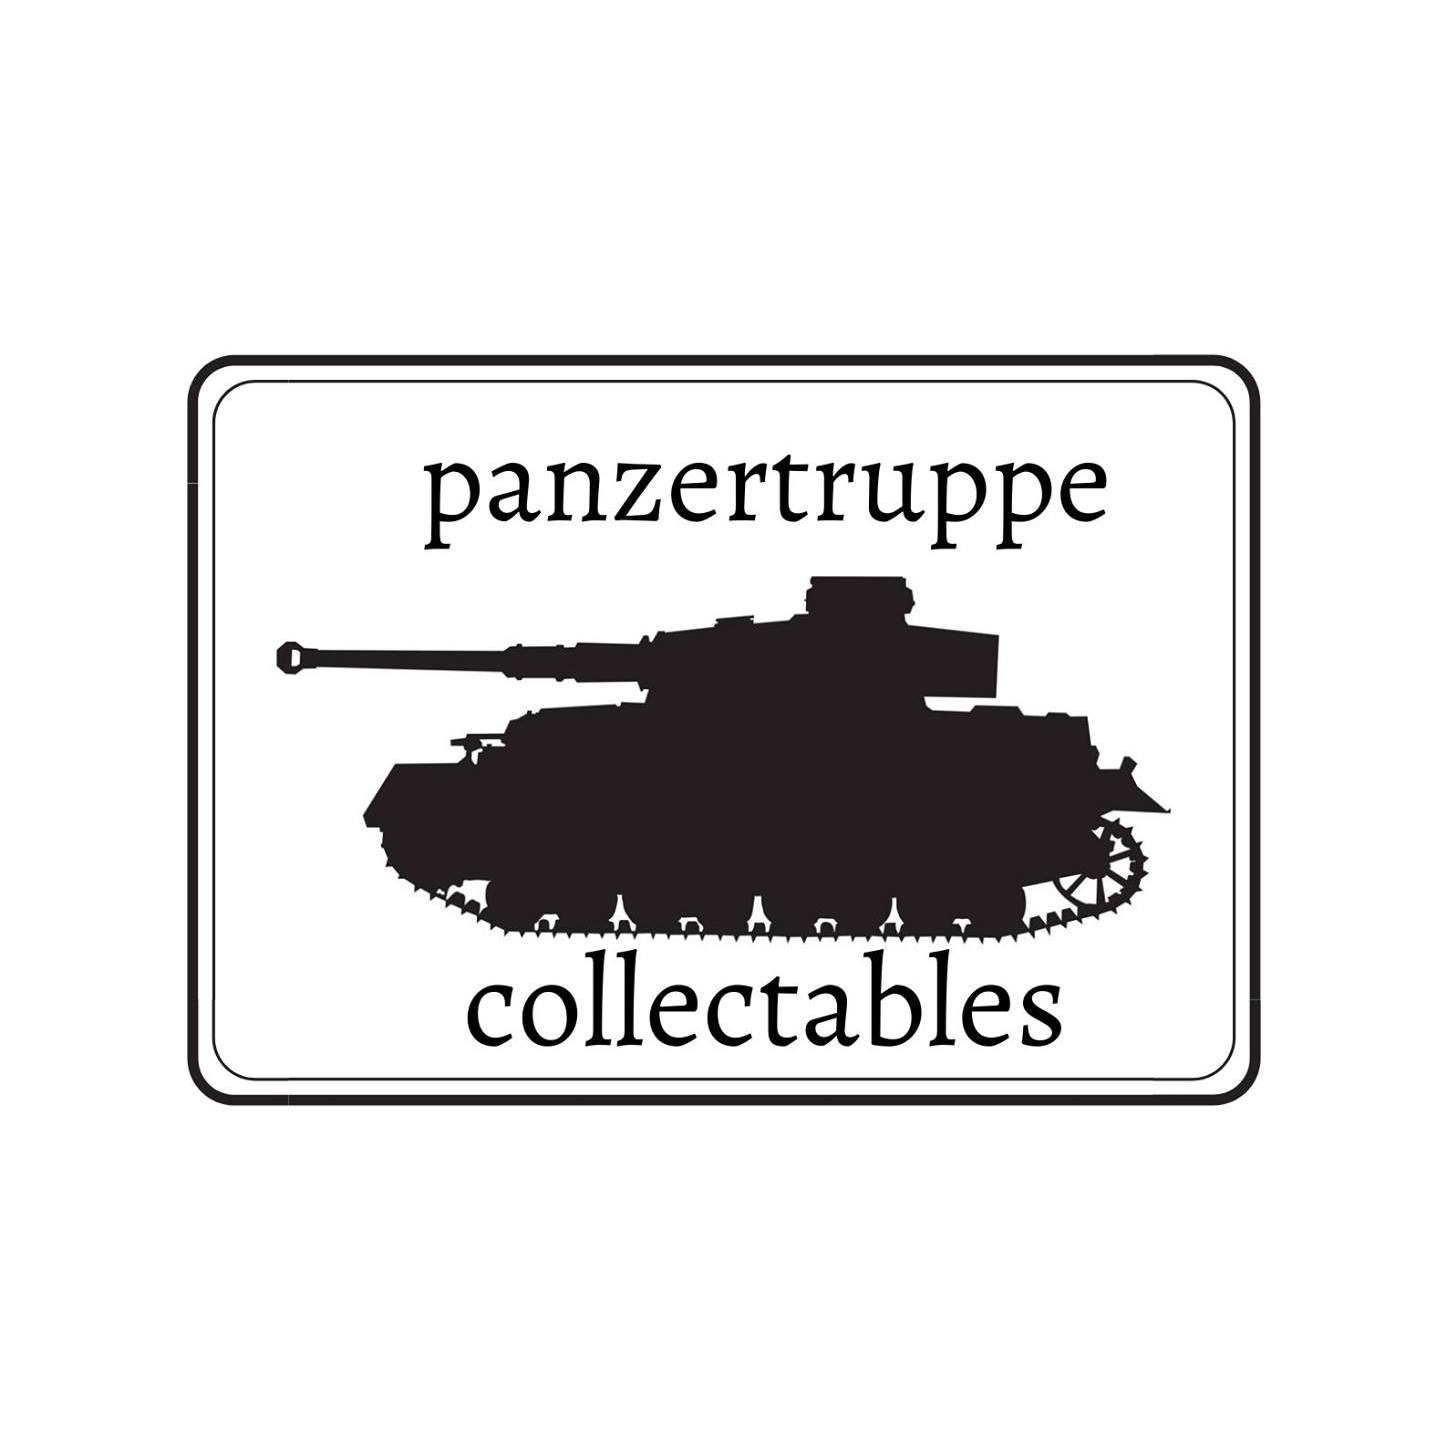 Panzertruppe collectables